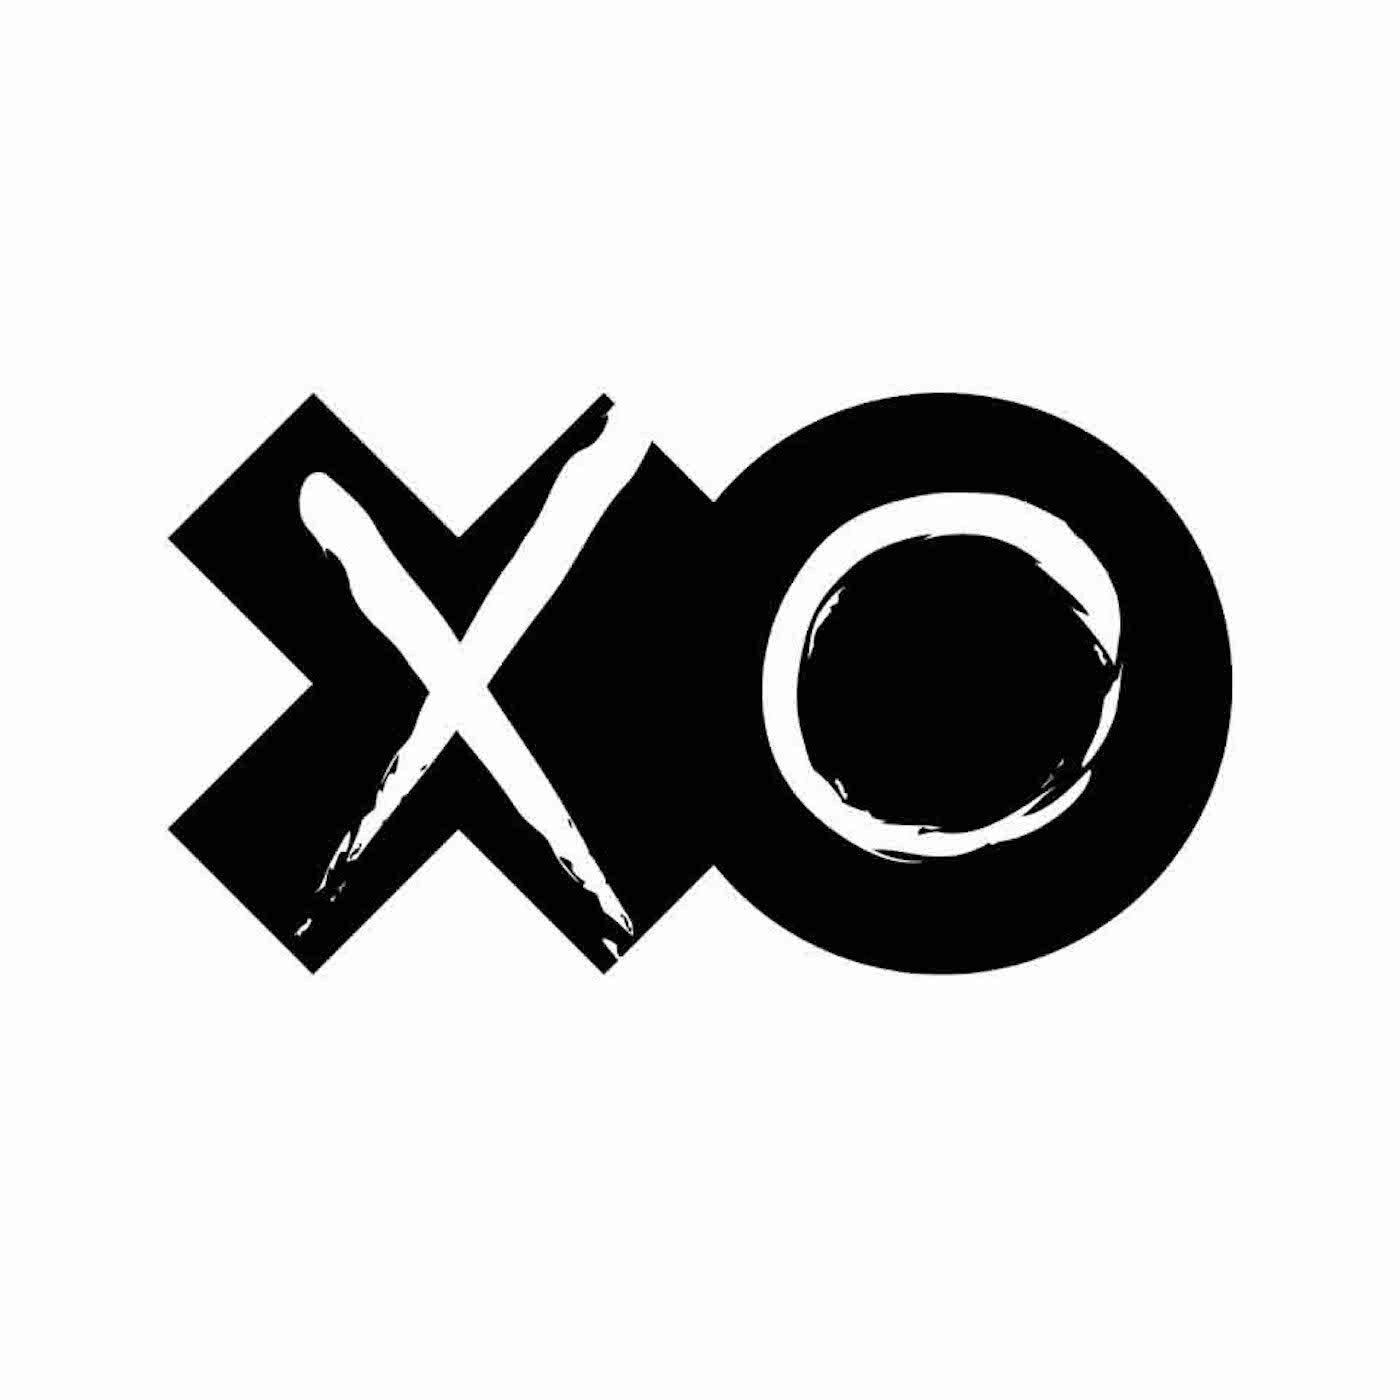 X o game. Логотип x. X.O. лого. XO обложка. Символ o.